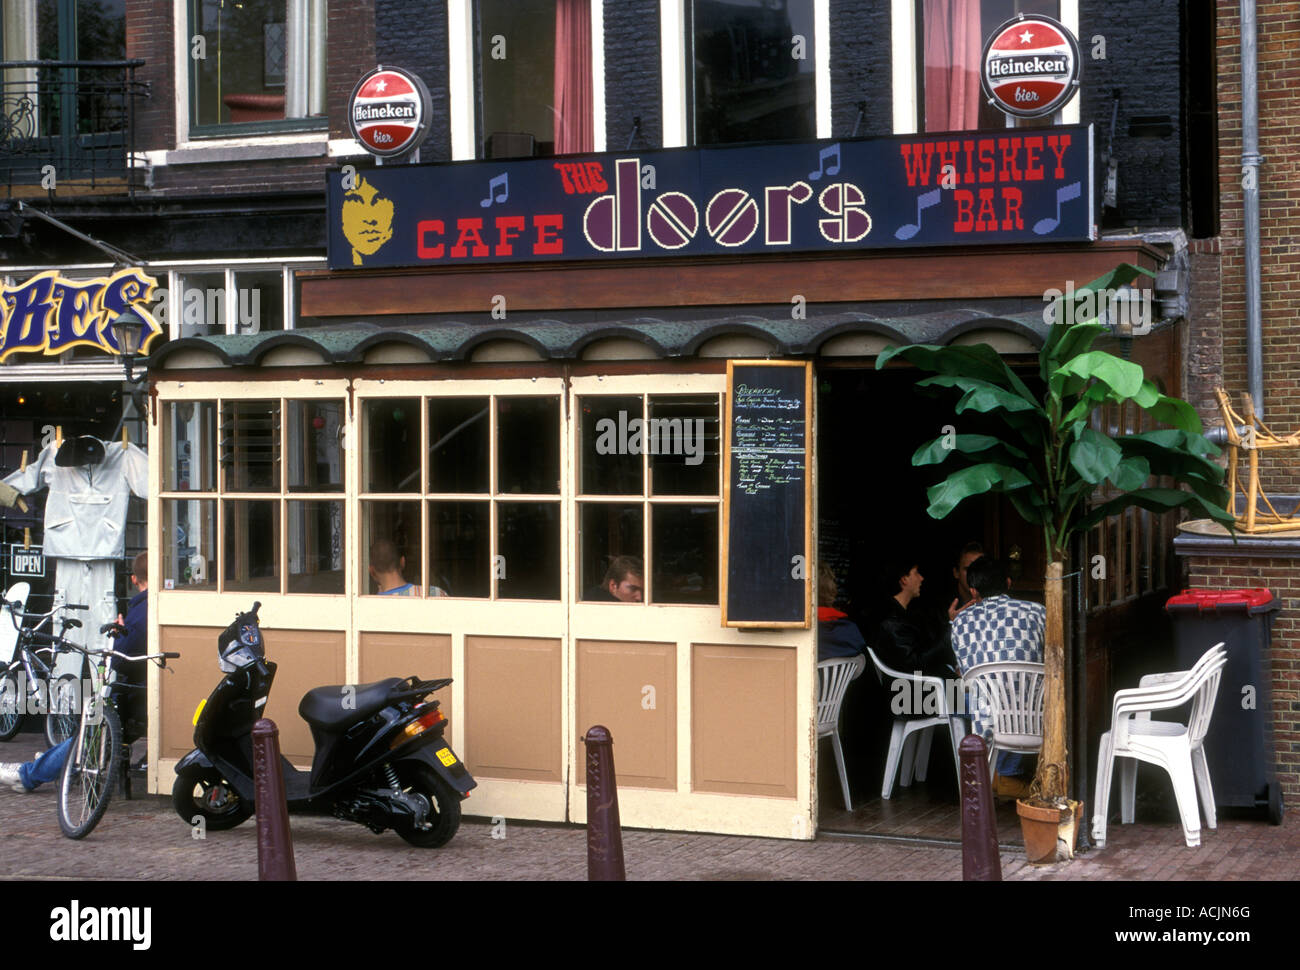 The Doors cafe whiskey bar, The Doors cafe, whiskey bar, Singelgracht,  Amsterdam, Holland, Netherlands, Europe Stock Photo - Alamy